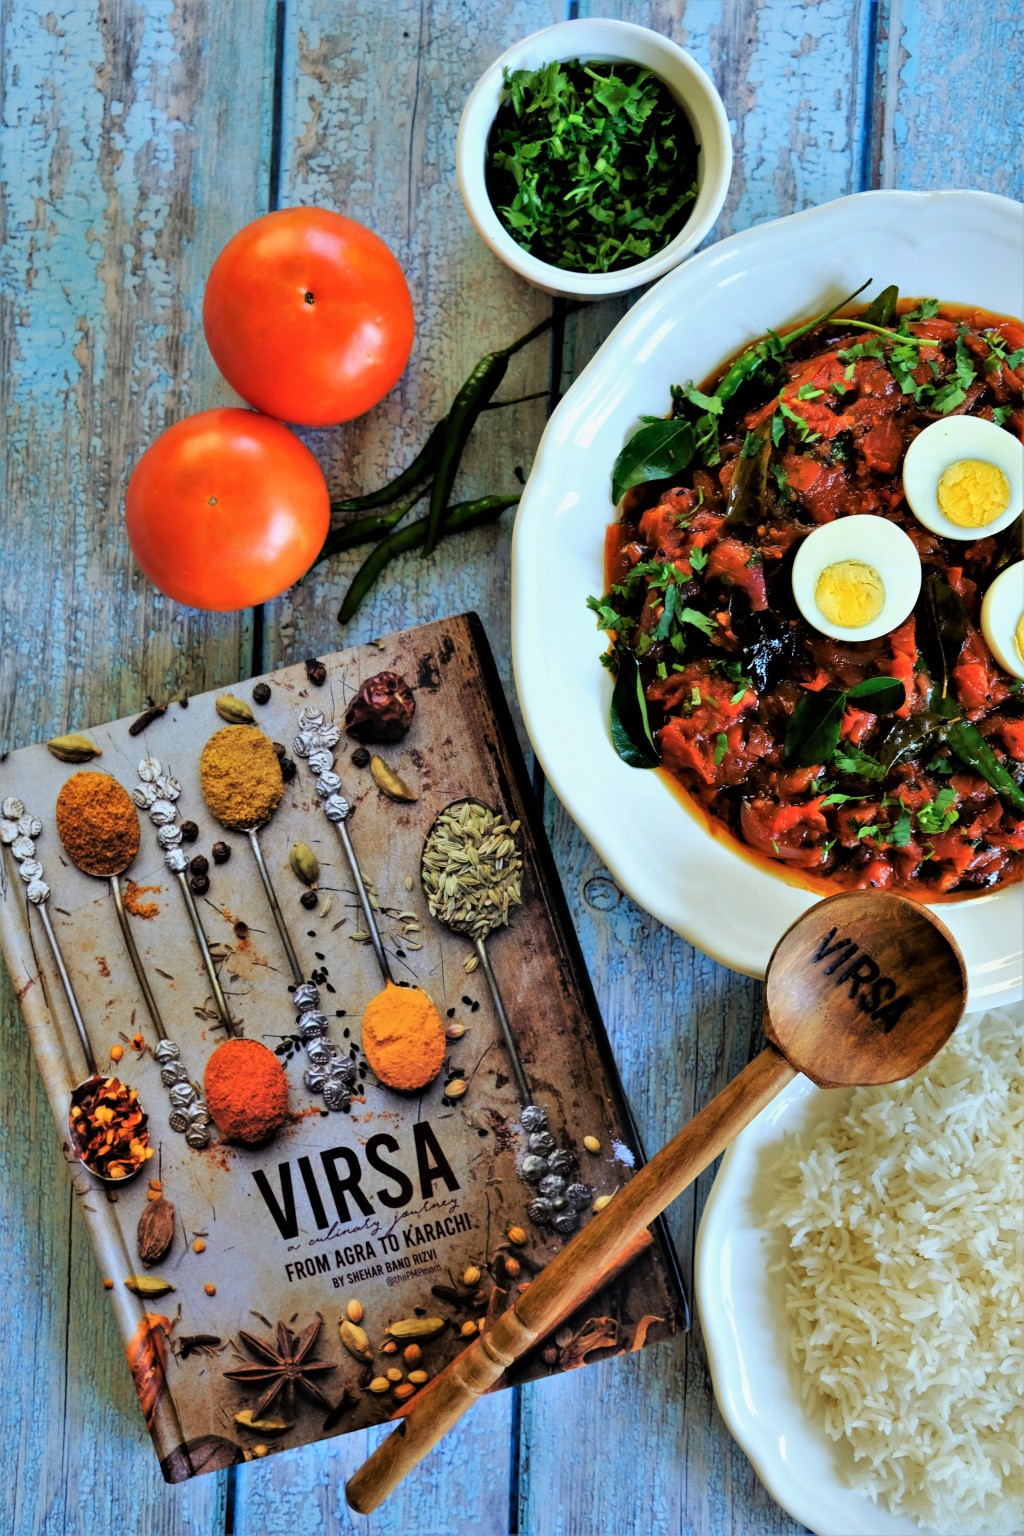 Virsa – a culinary journey from Agra to Karachi by Shehar Bano Rizvi